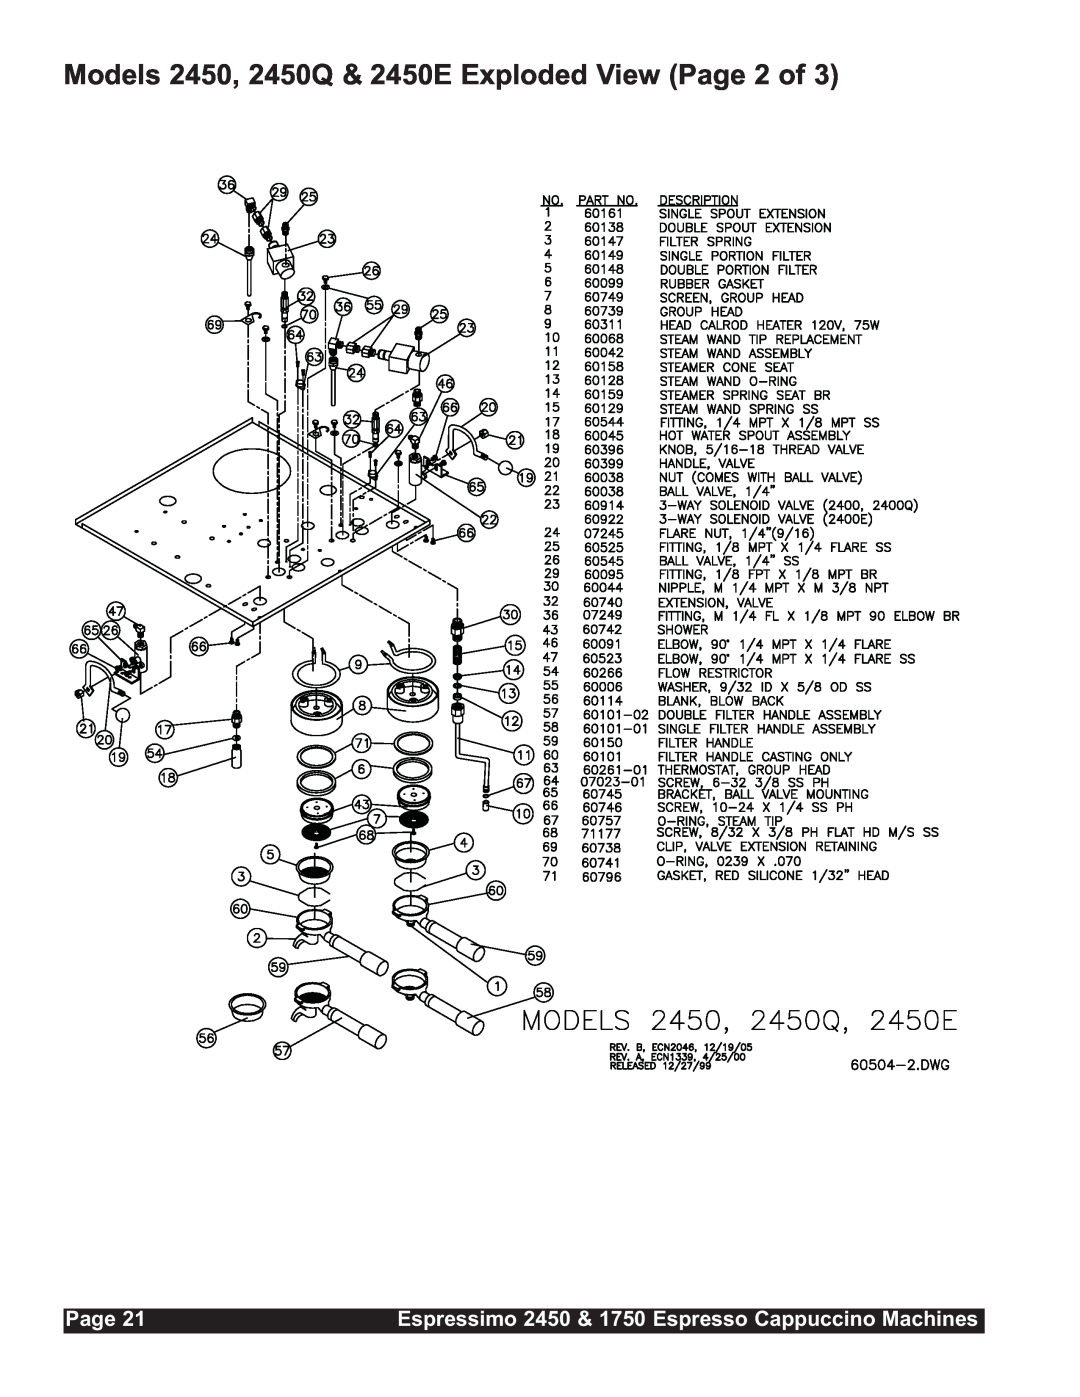 Grindmaster 2450, 1750 installation manual Page 